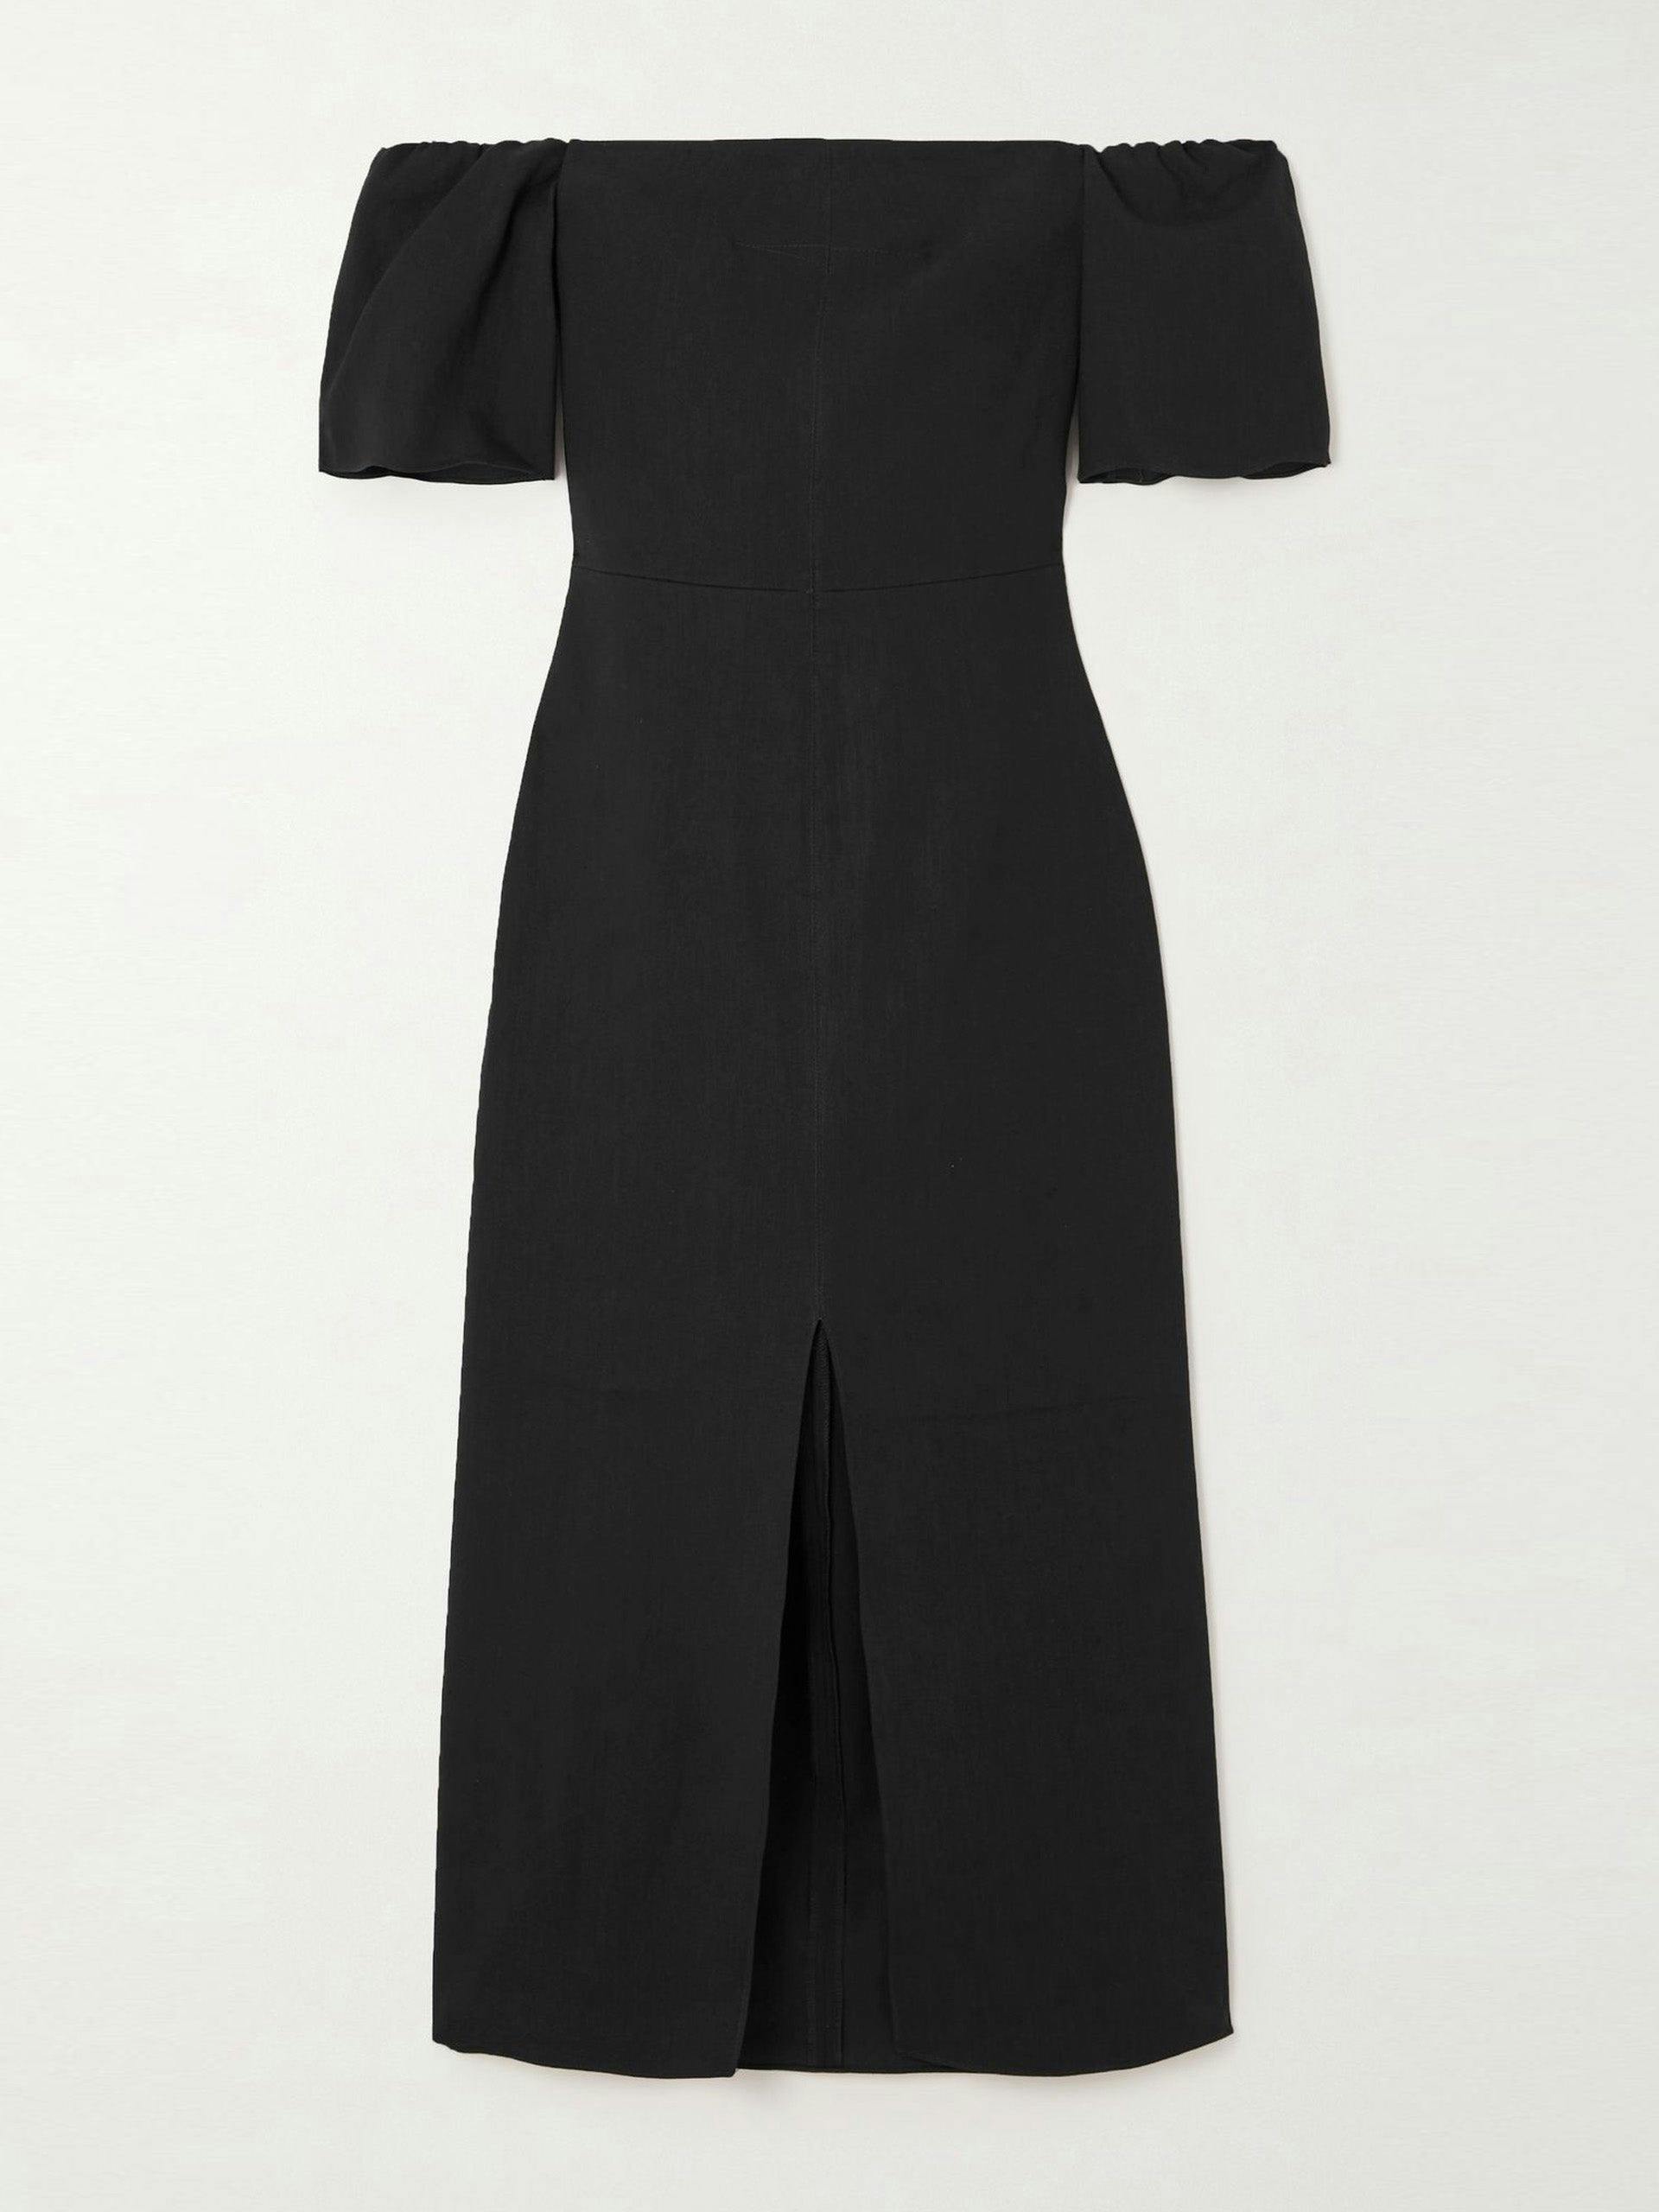 Black off-the-shoulder midi dress